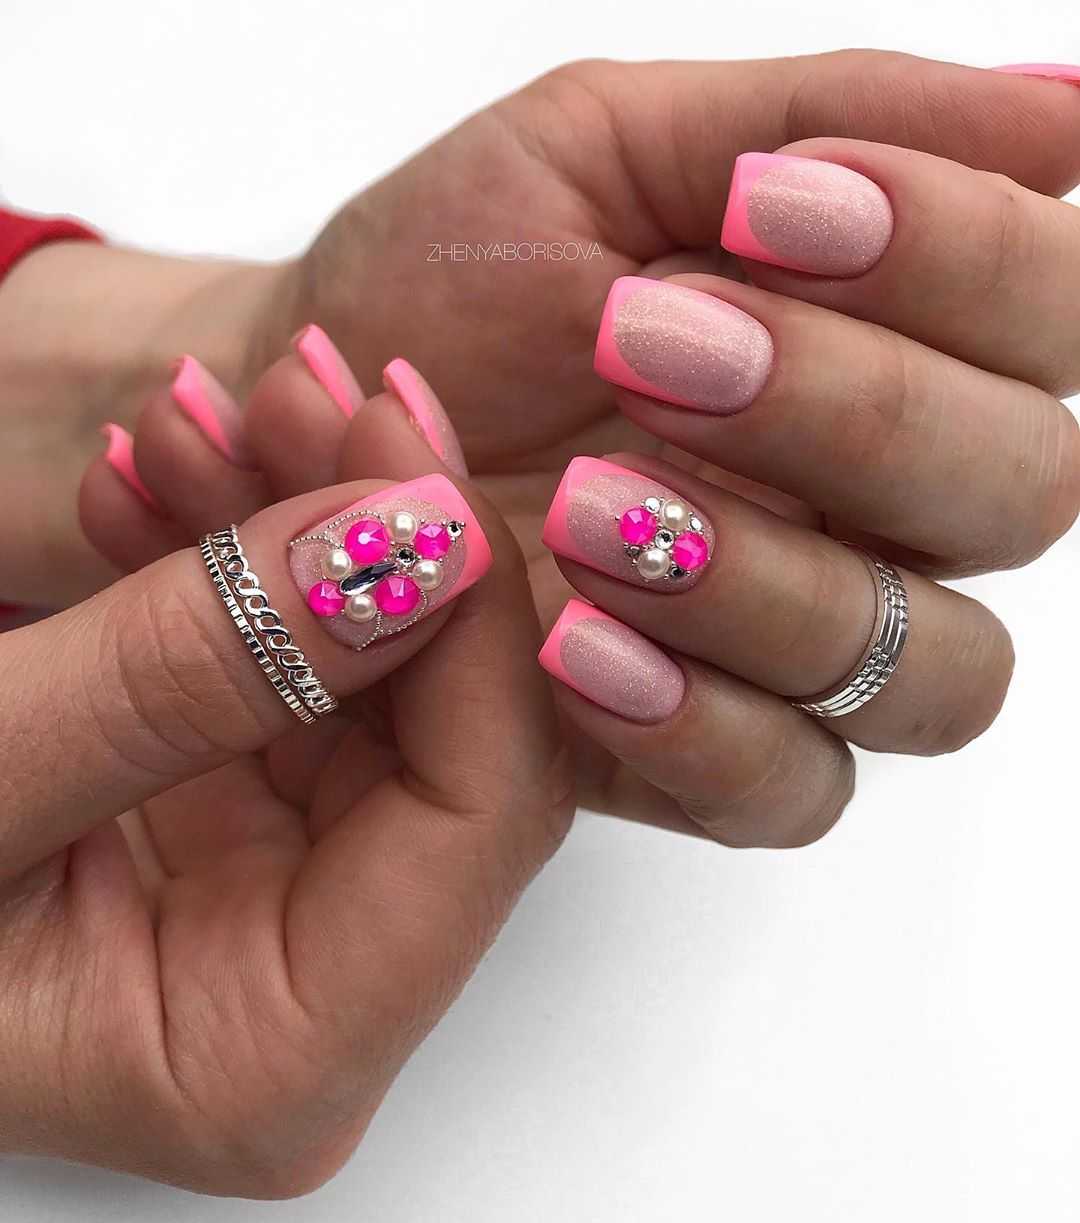 Маникюр розовый модные. Розовые ногти. Р̸о̸з̸о̸в̸ы̸й̸ м̸а̸н̸и̸к̸. Летний розовый маникюр на короткие ногти. Модные розовые ногти.